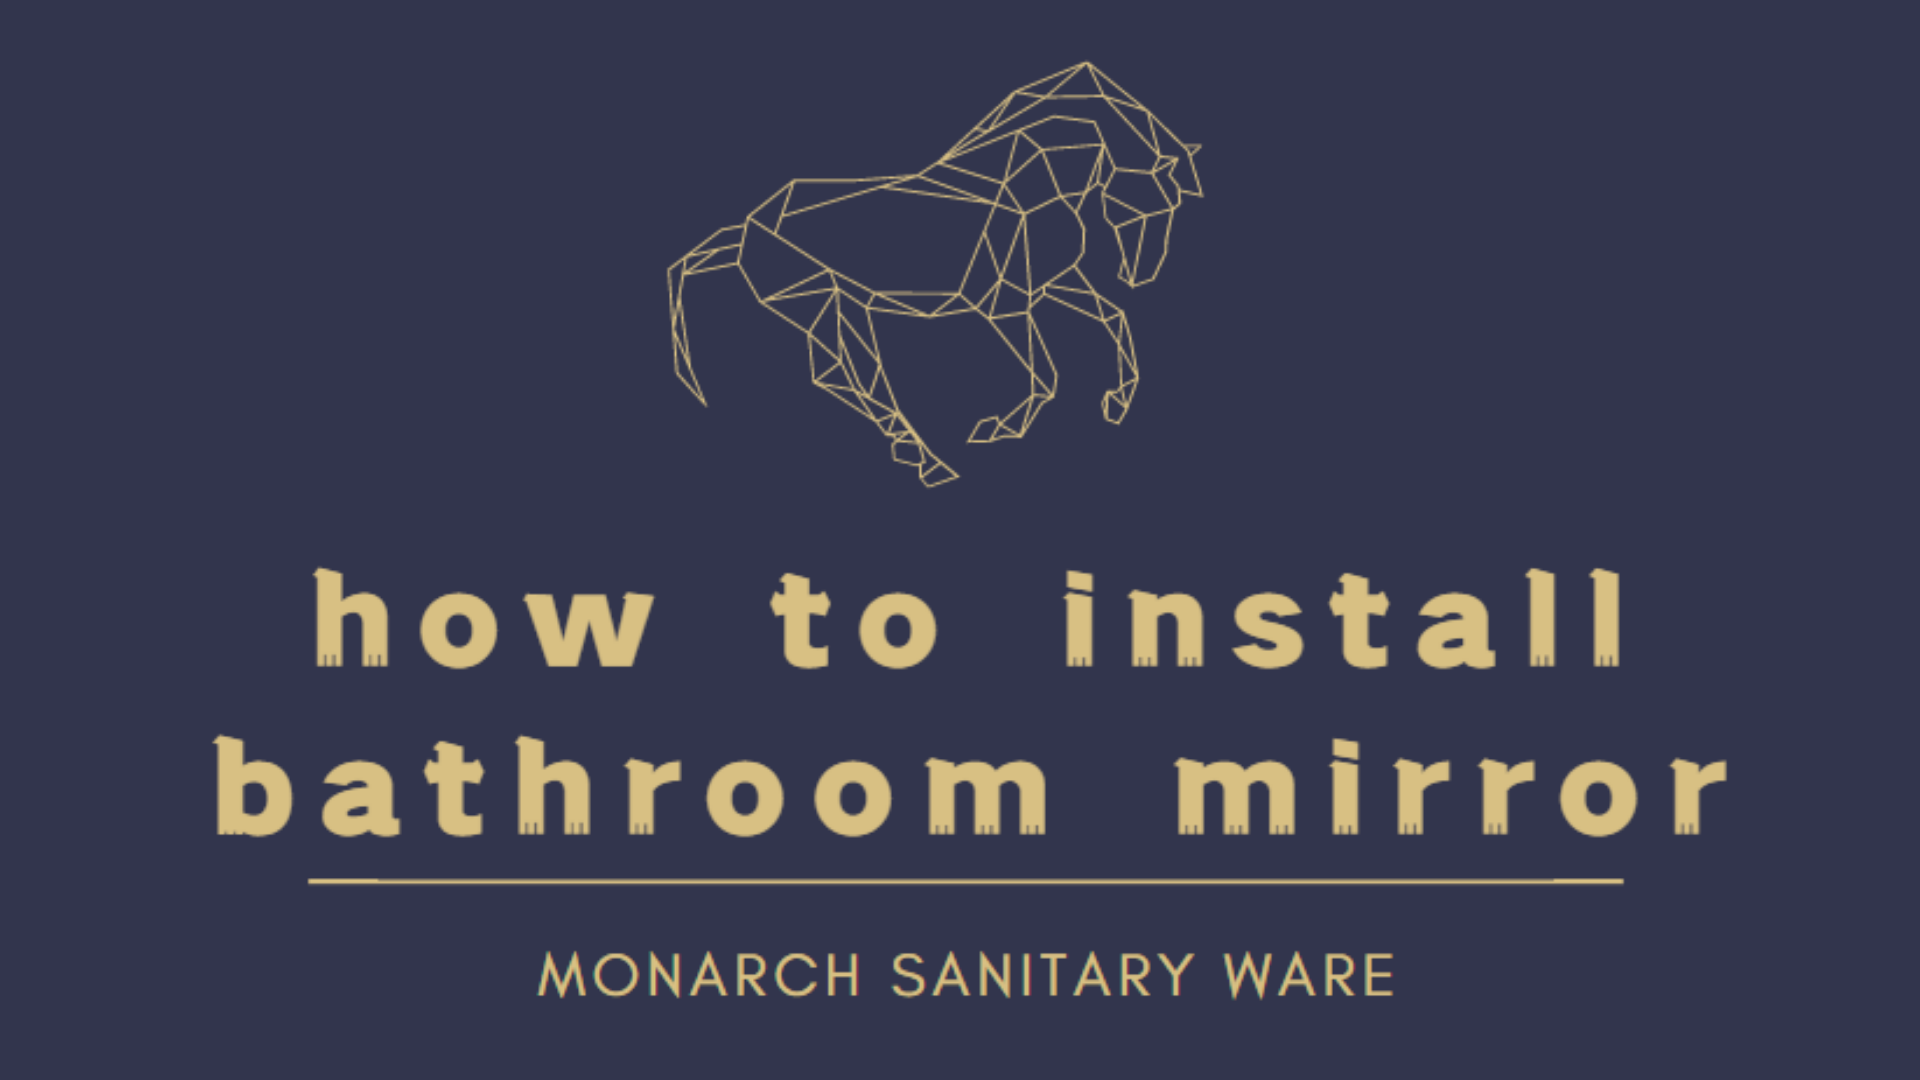 Comment installer un miroir de salle de bain